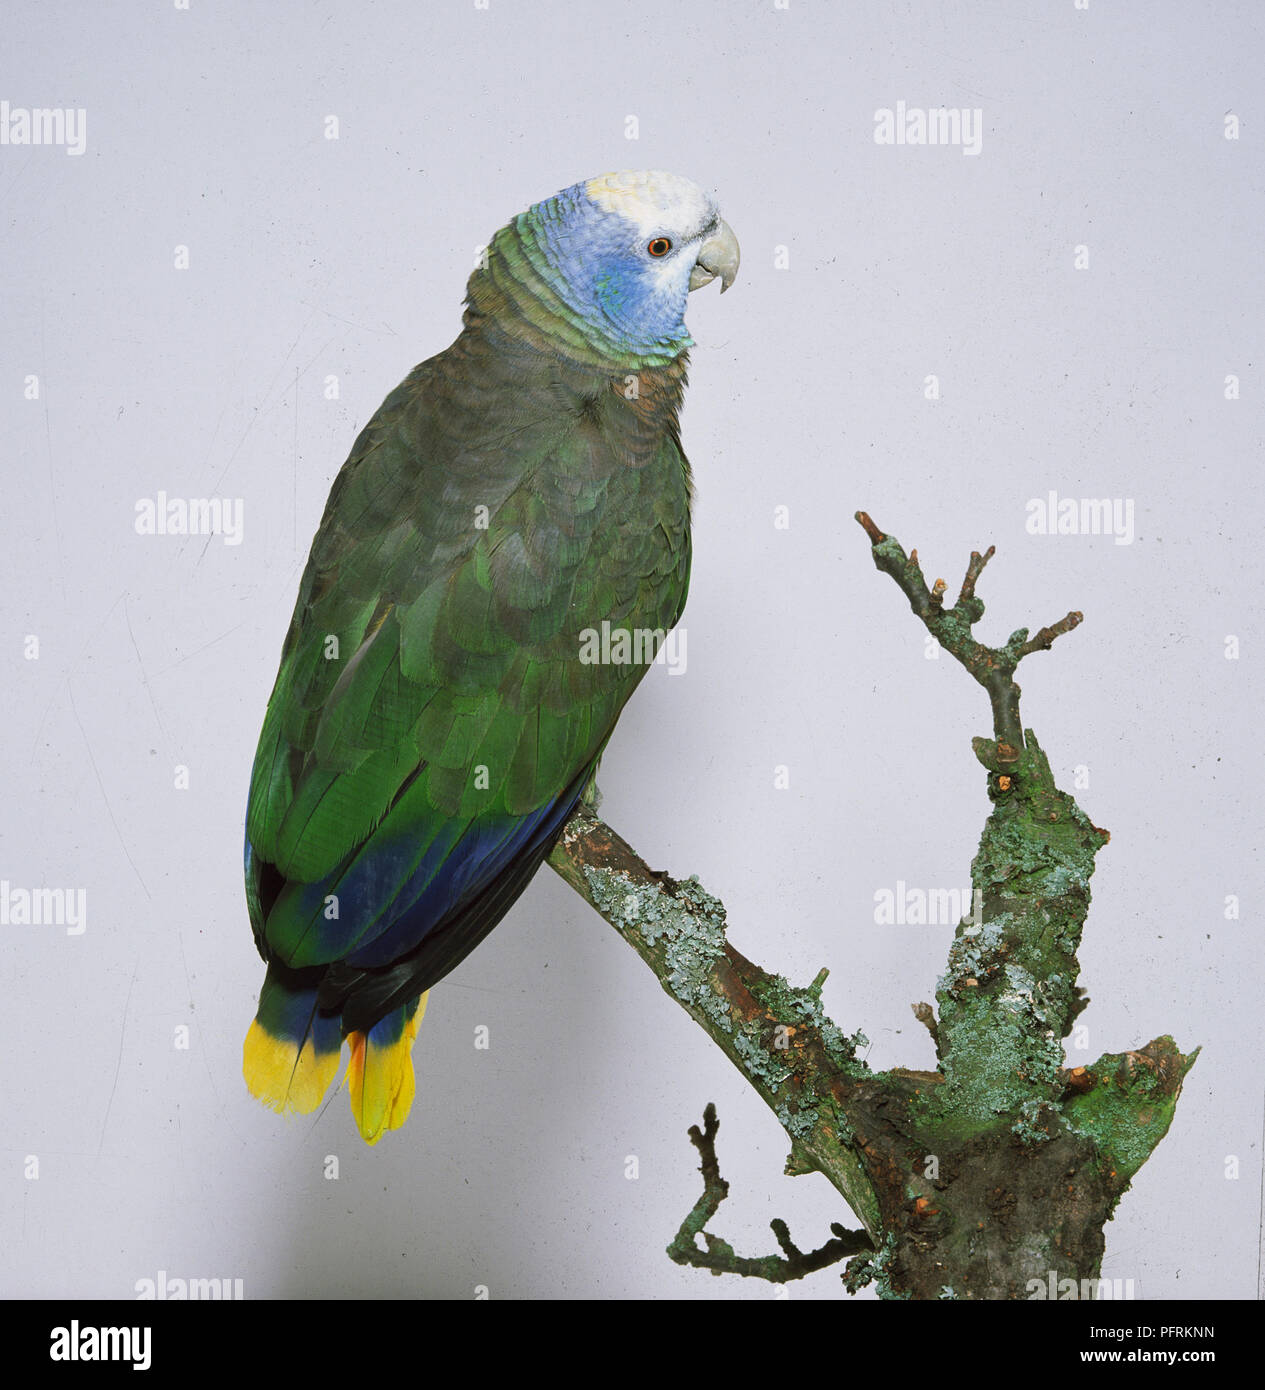 Saint Vincent Amazon (Amazona guildingii) parrot perching on branch Stock Photo